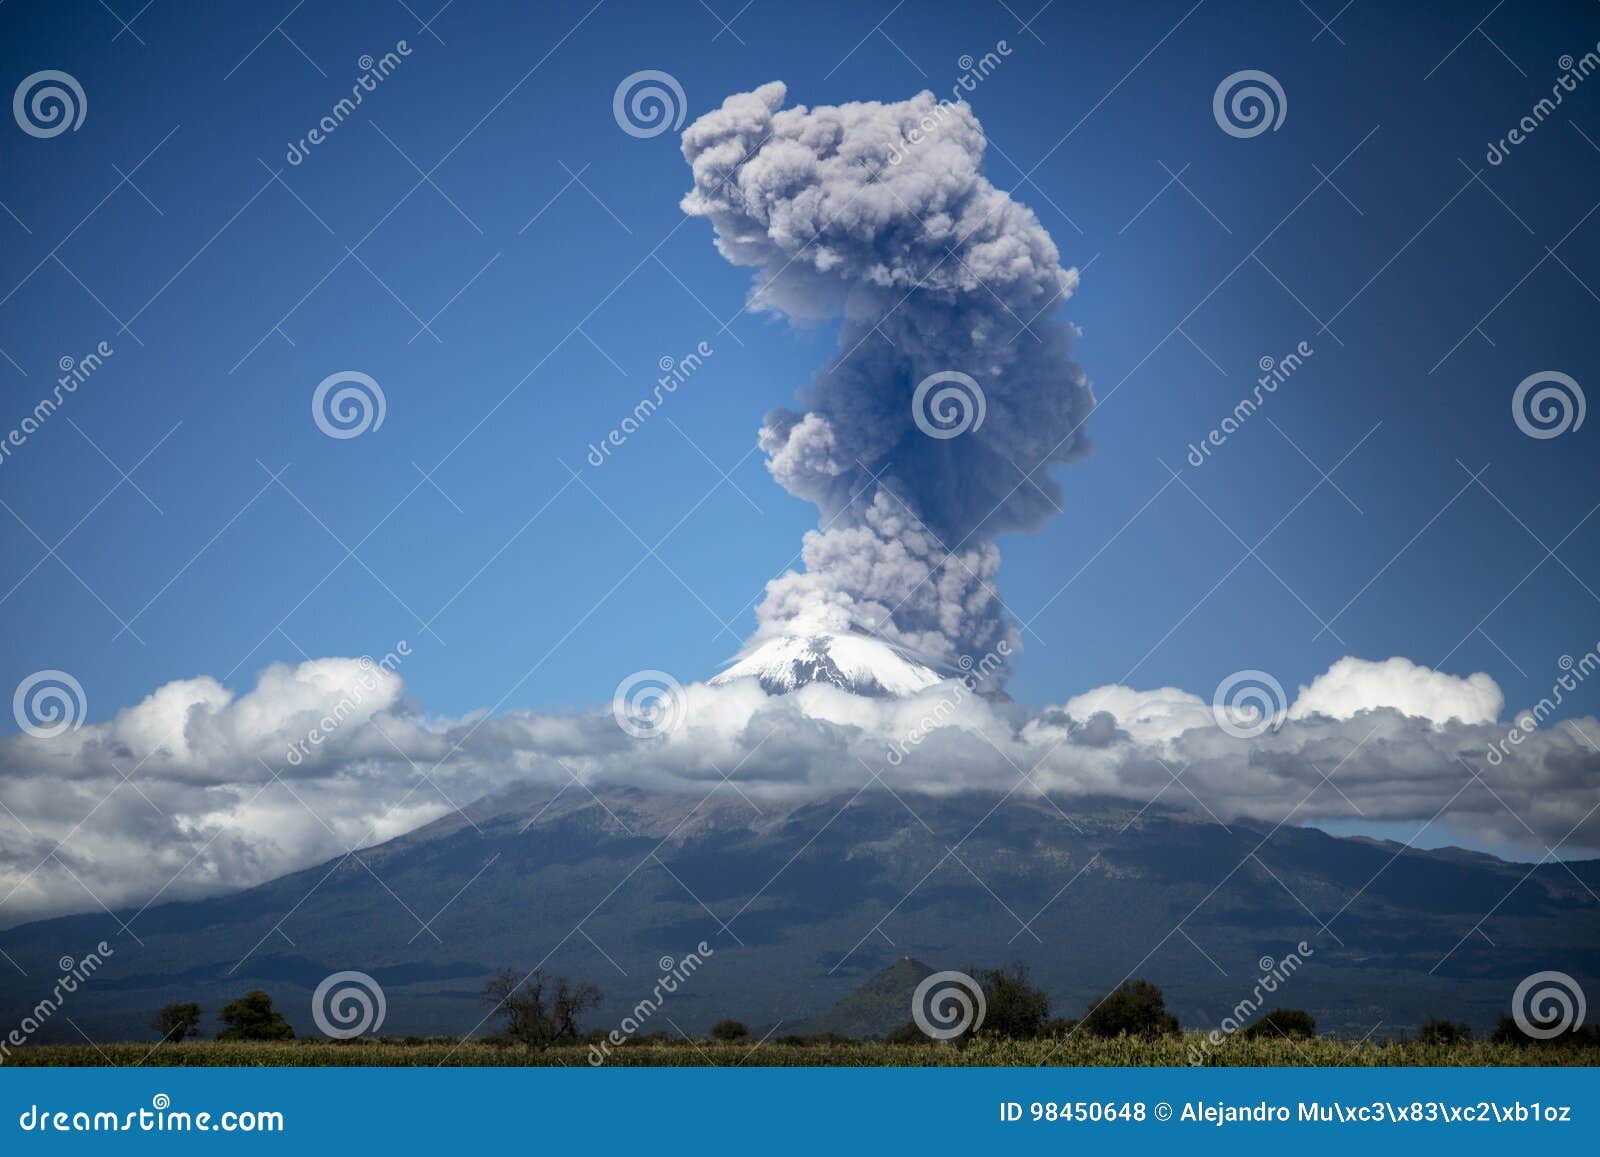 popocatepetl volcano explosion